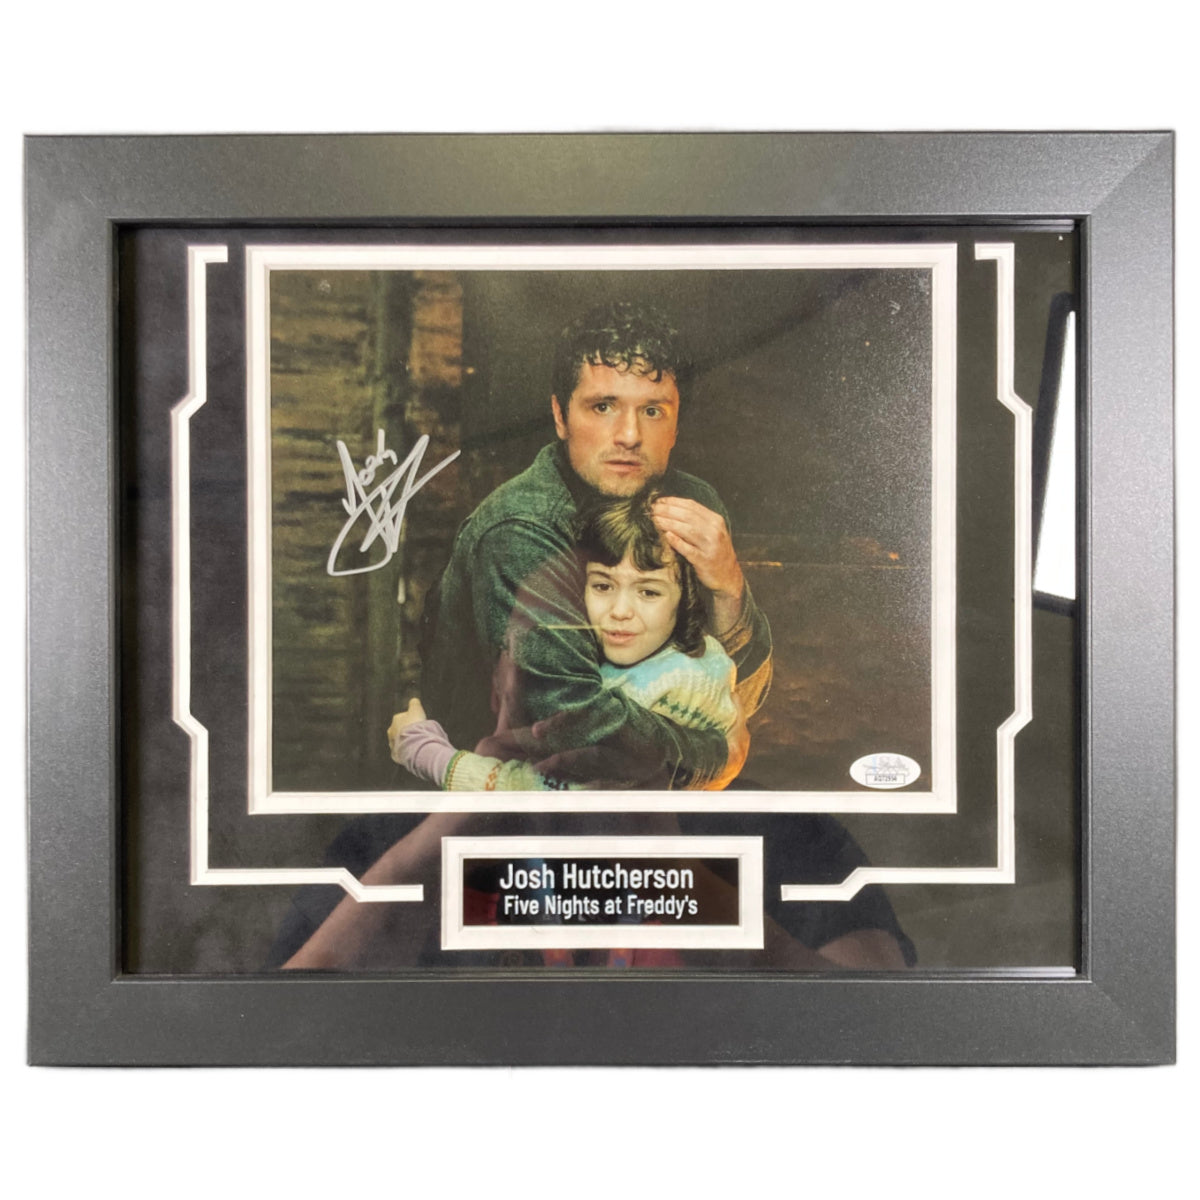 Josh Hutcherson Signed Custom Framed 8x10 Photo Five Nights at Freddy's Autographed JSA COA